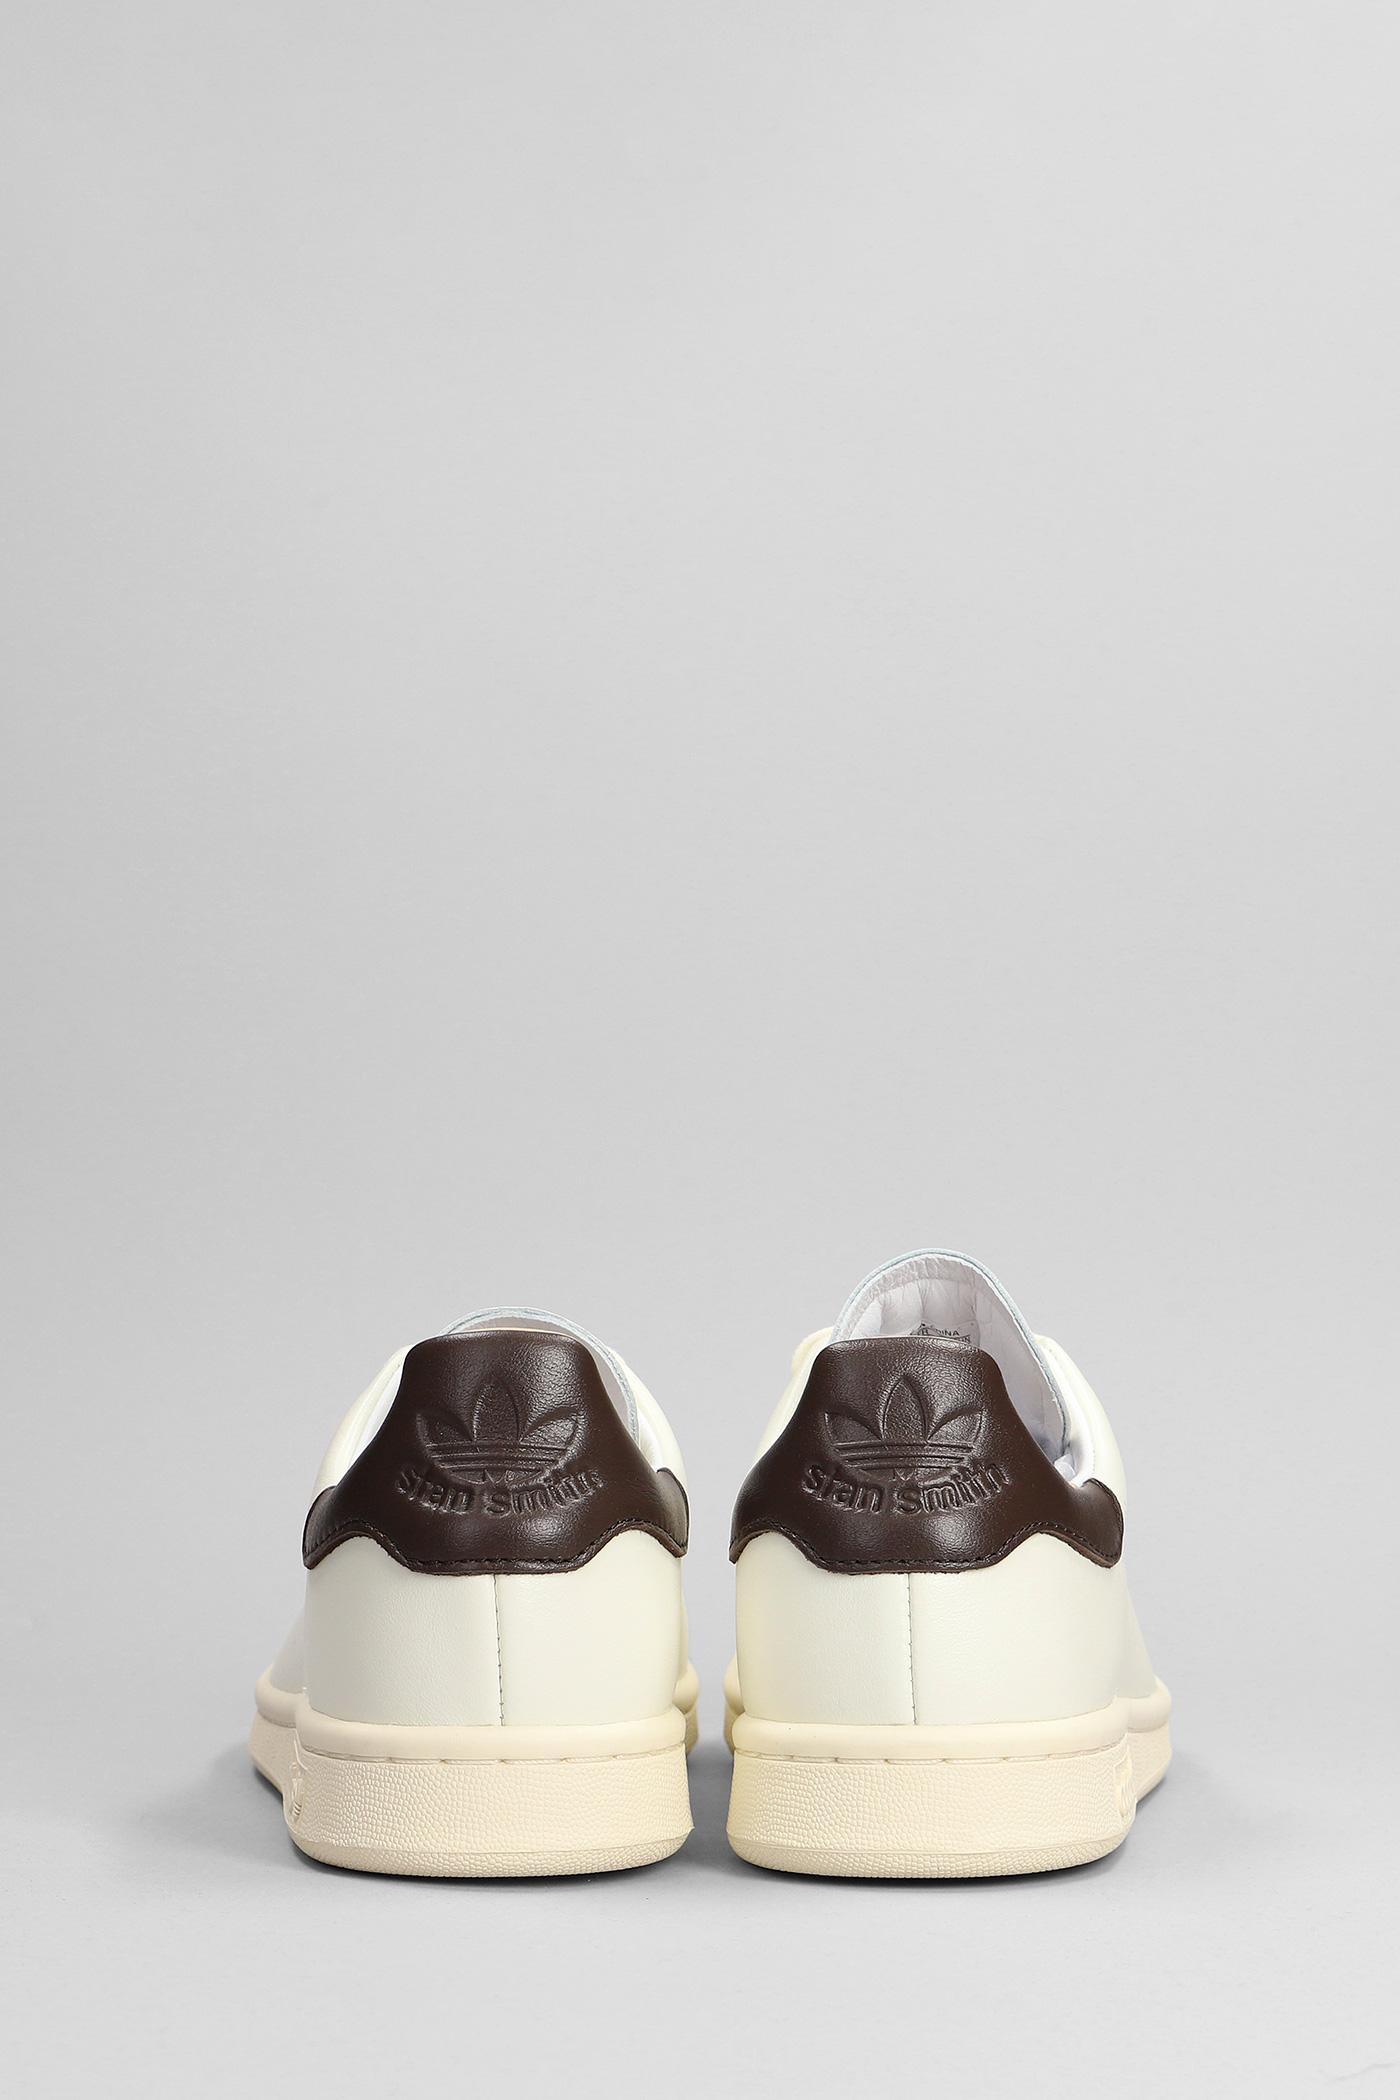 Adidas Stan Smith Lux Off White / Cream White / Dark Brown